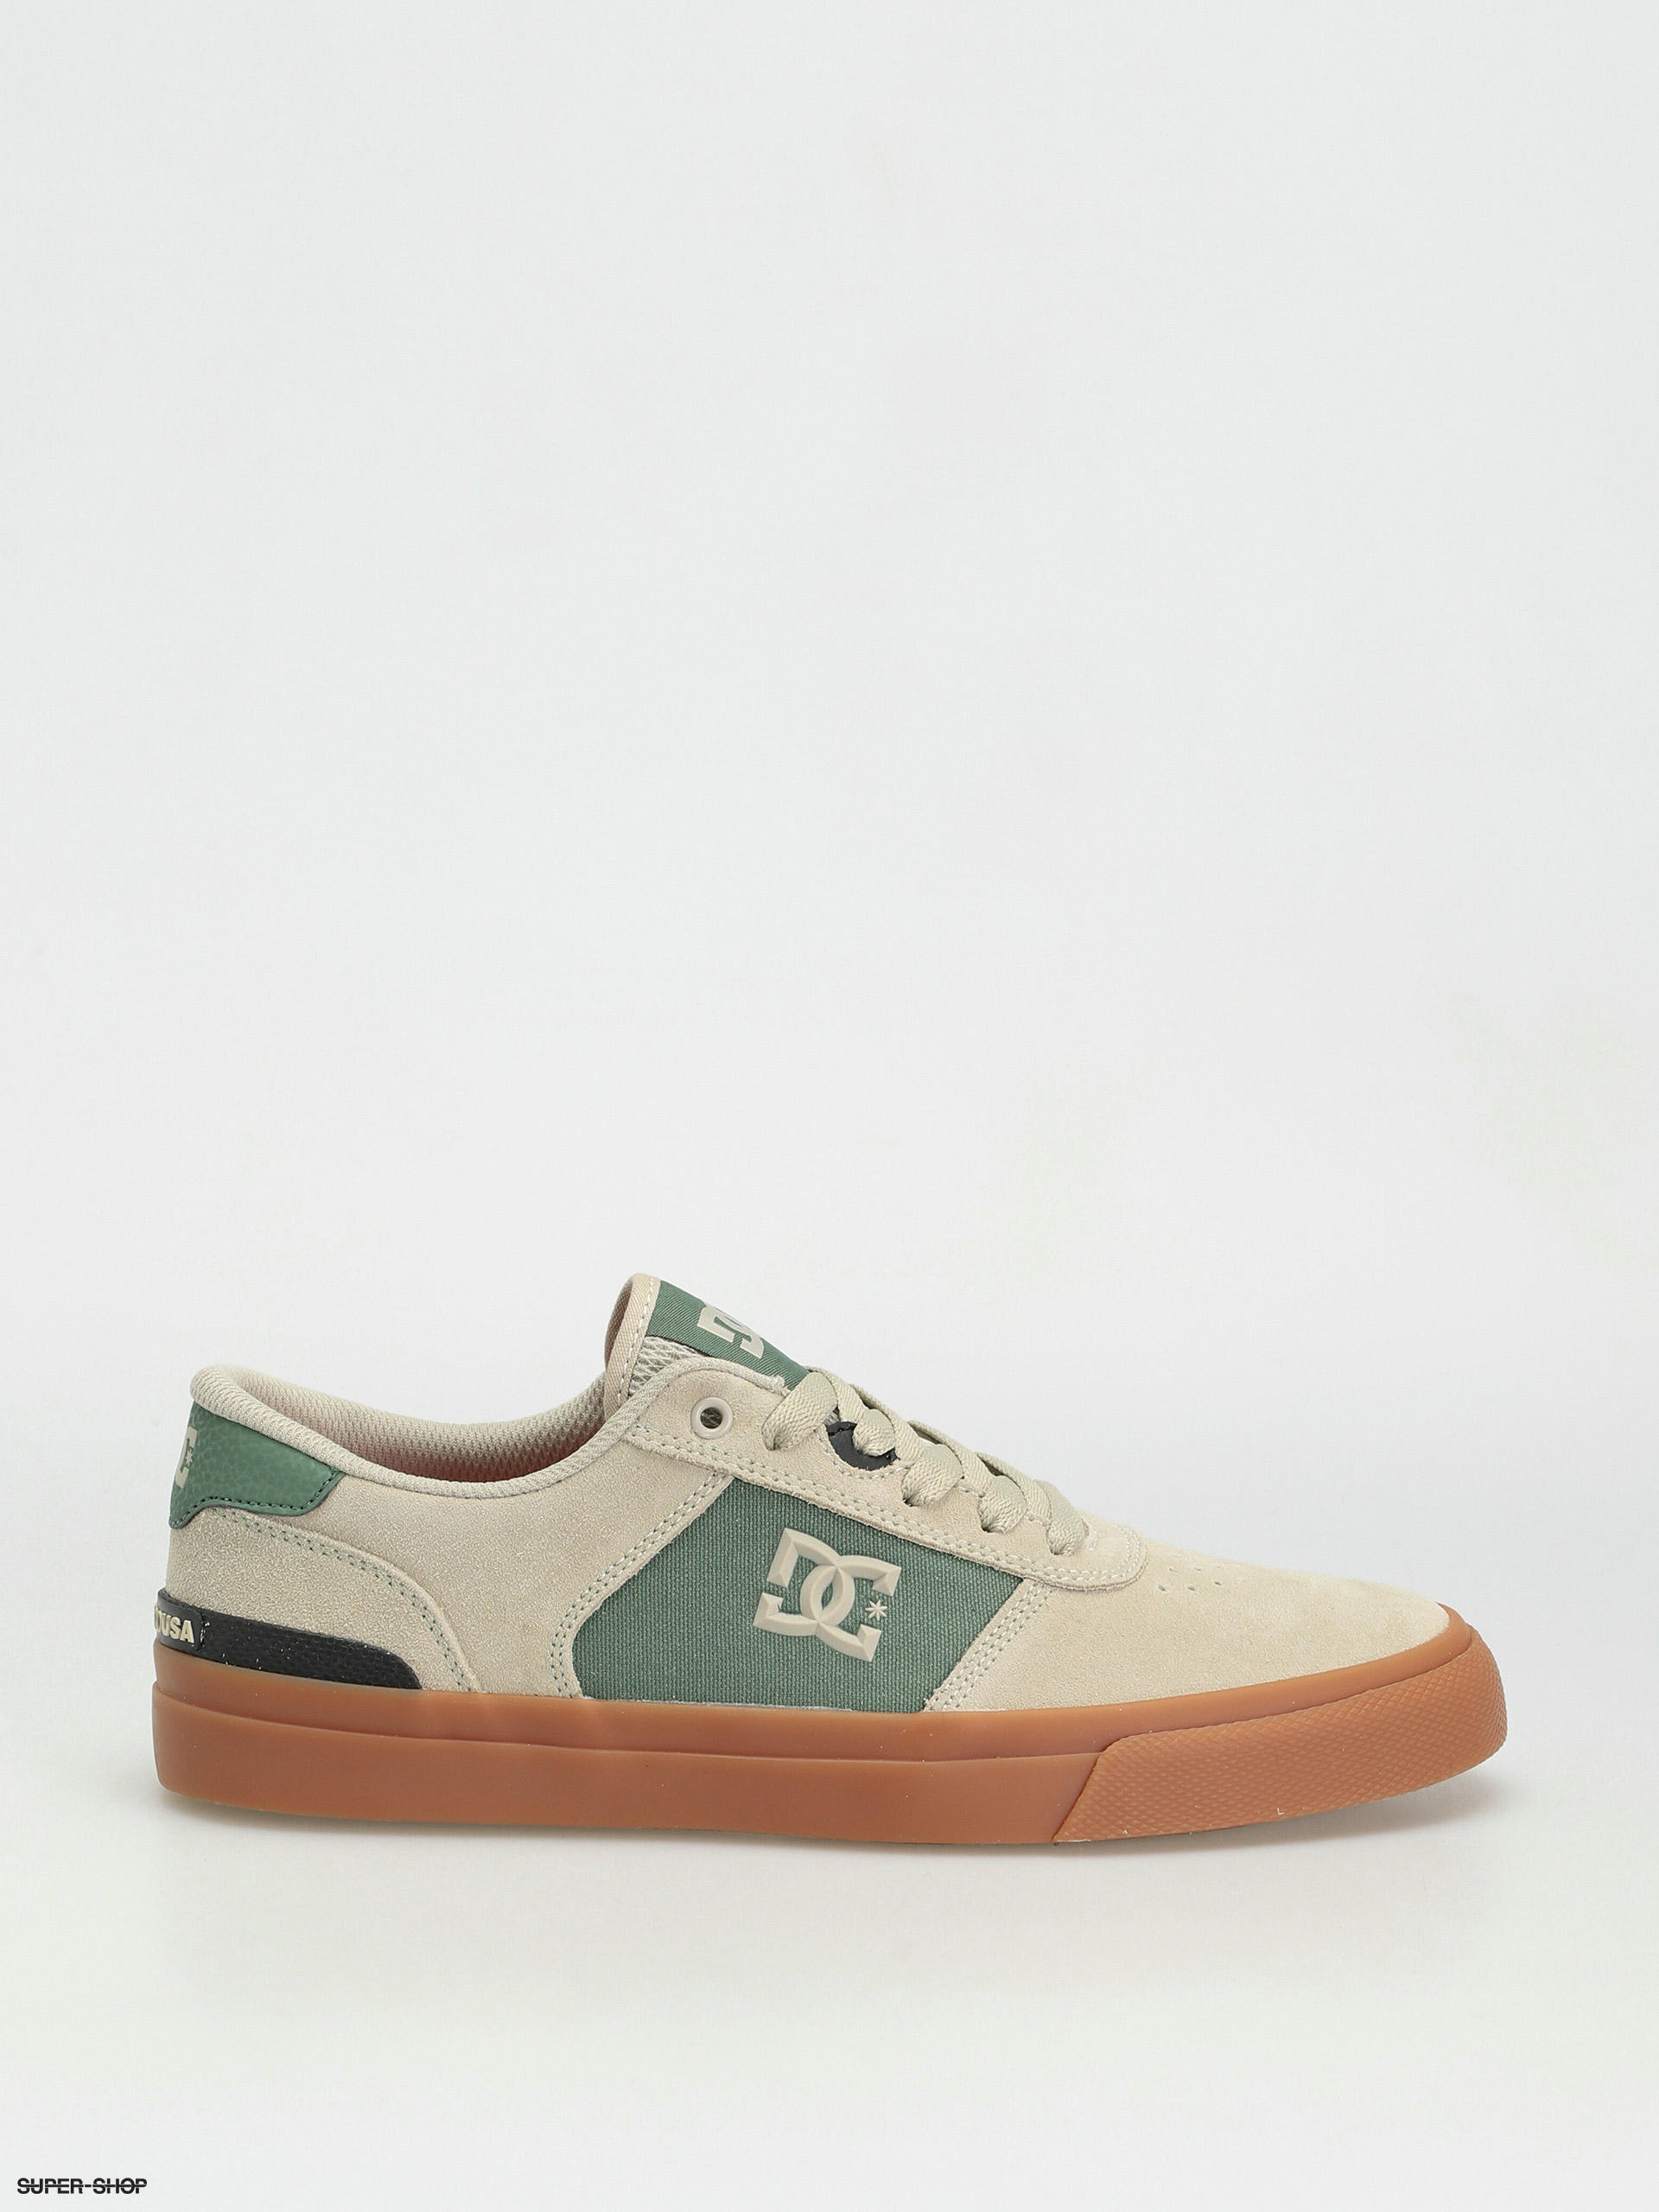 DC Teknic S Shoes (tan/green)